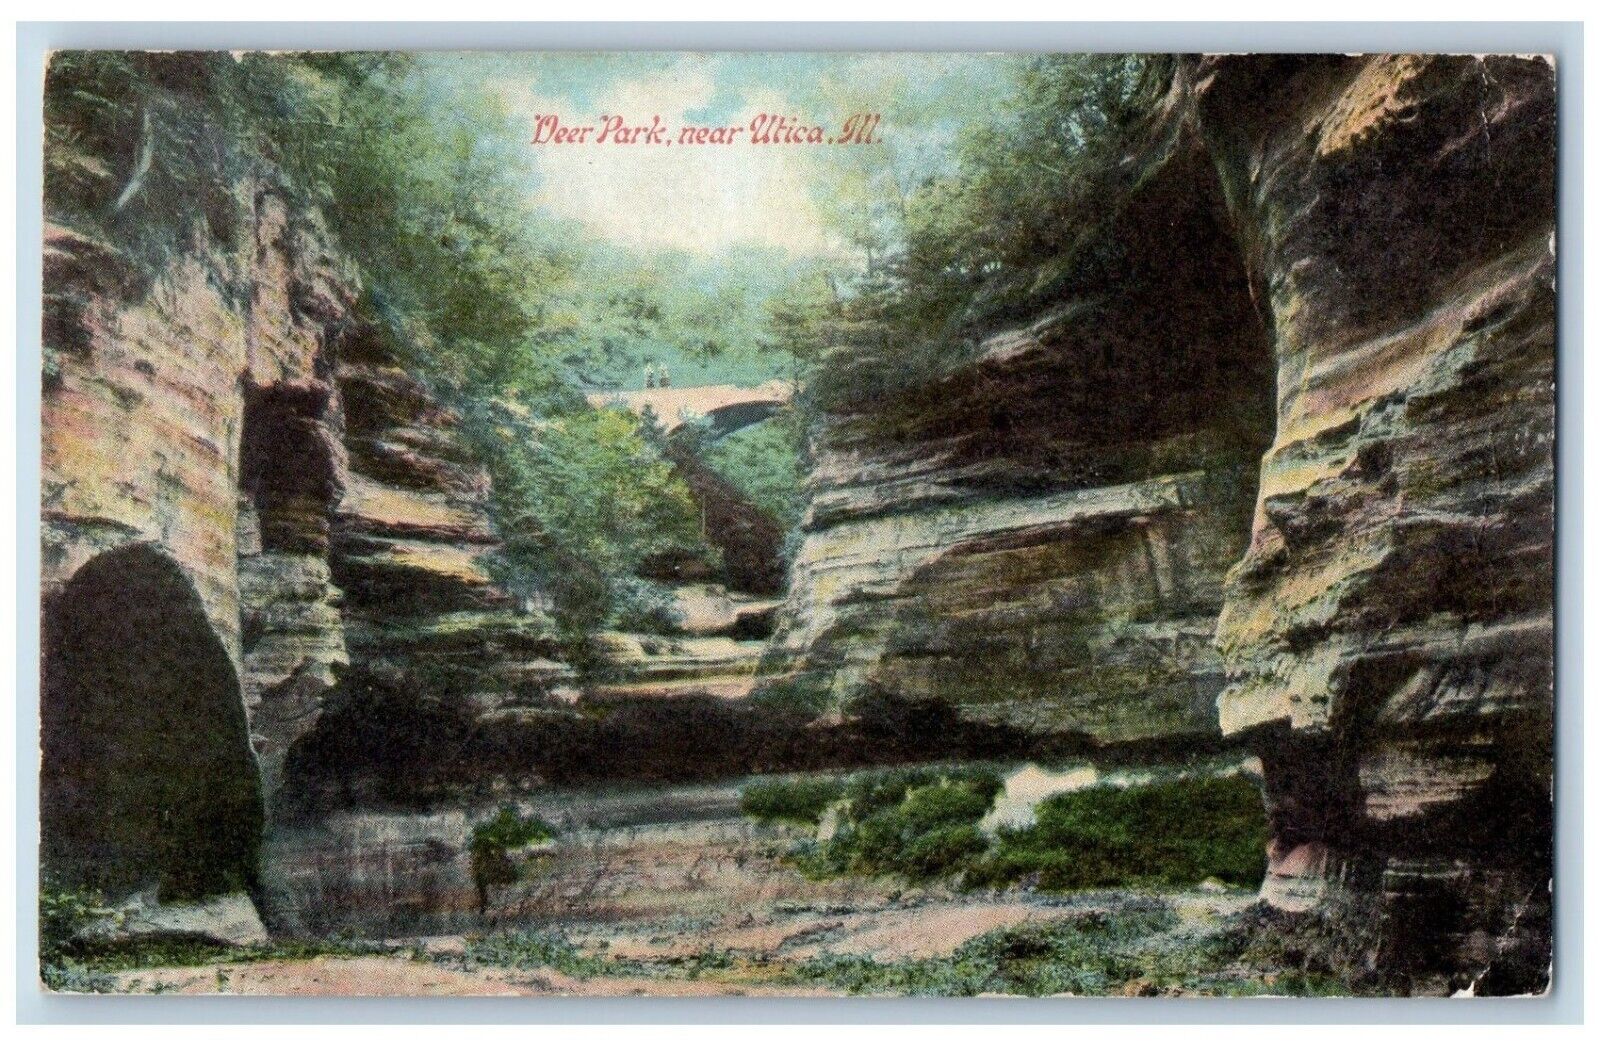 Utica Illinois IL Postcard Deer Park Utica Exterior Rocks c1910 Vintage Antique